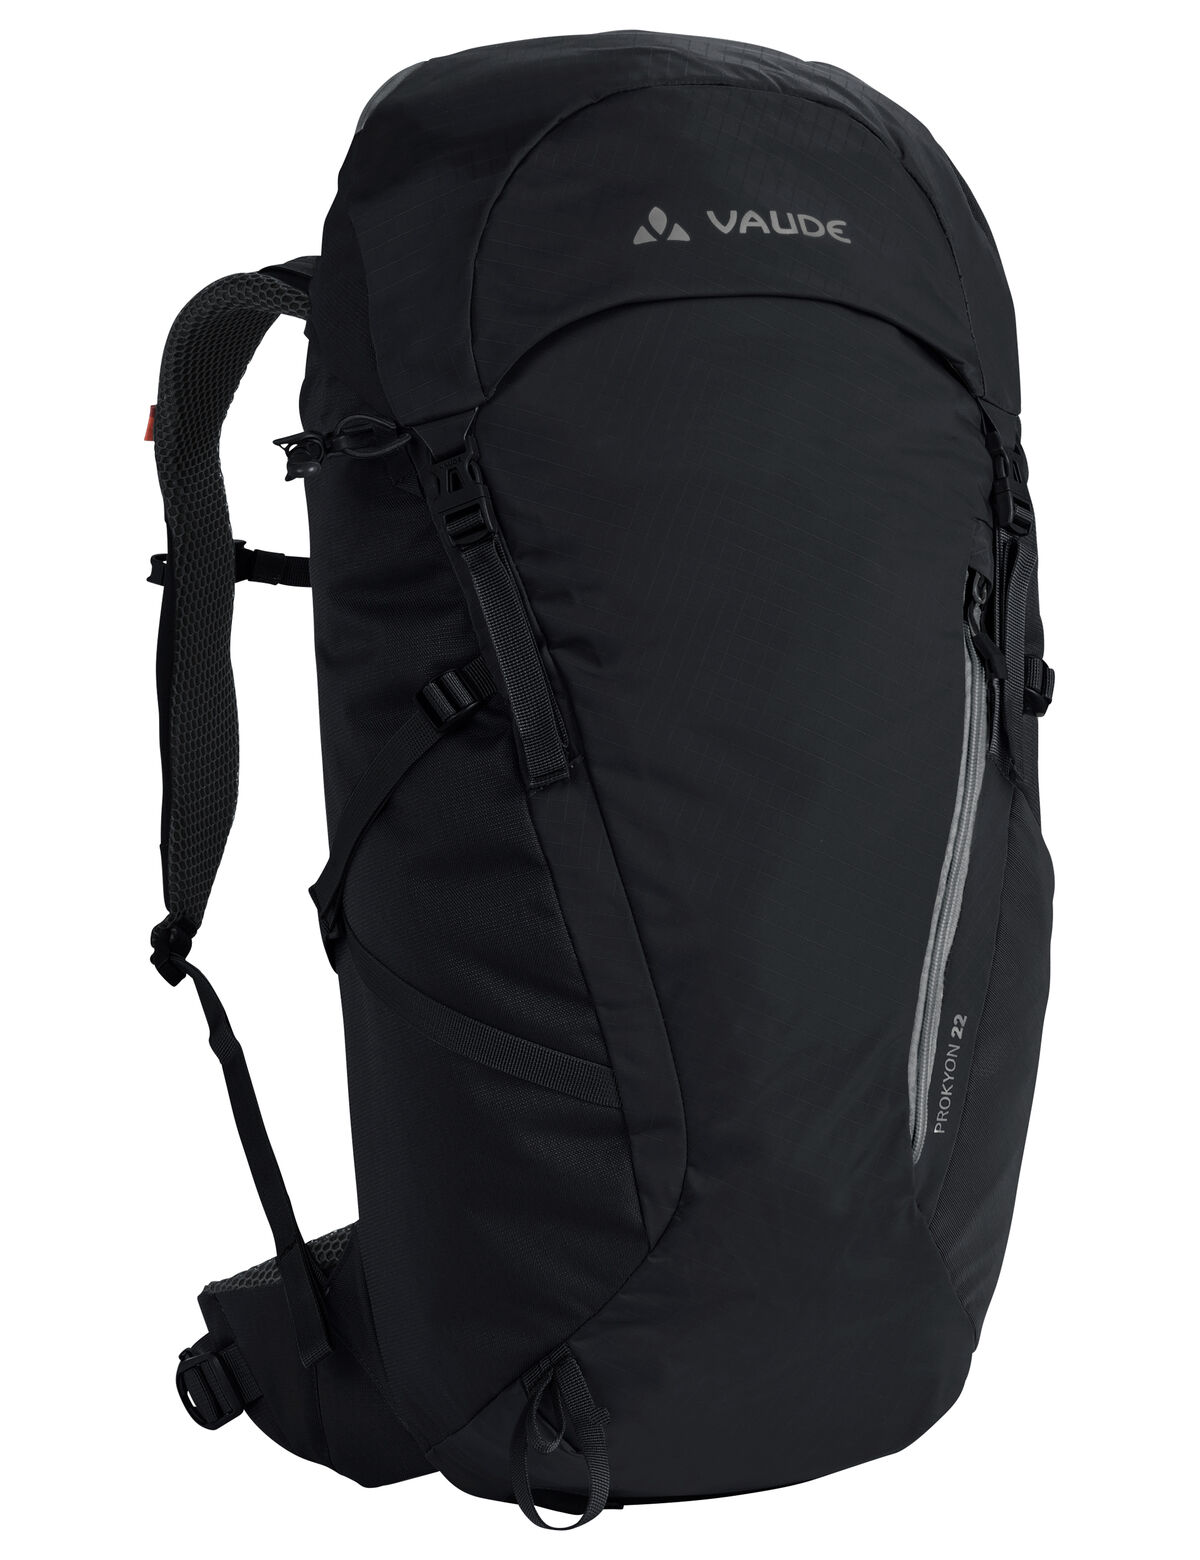 Vaude - Prokyon 22 - Hiking backpack